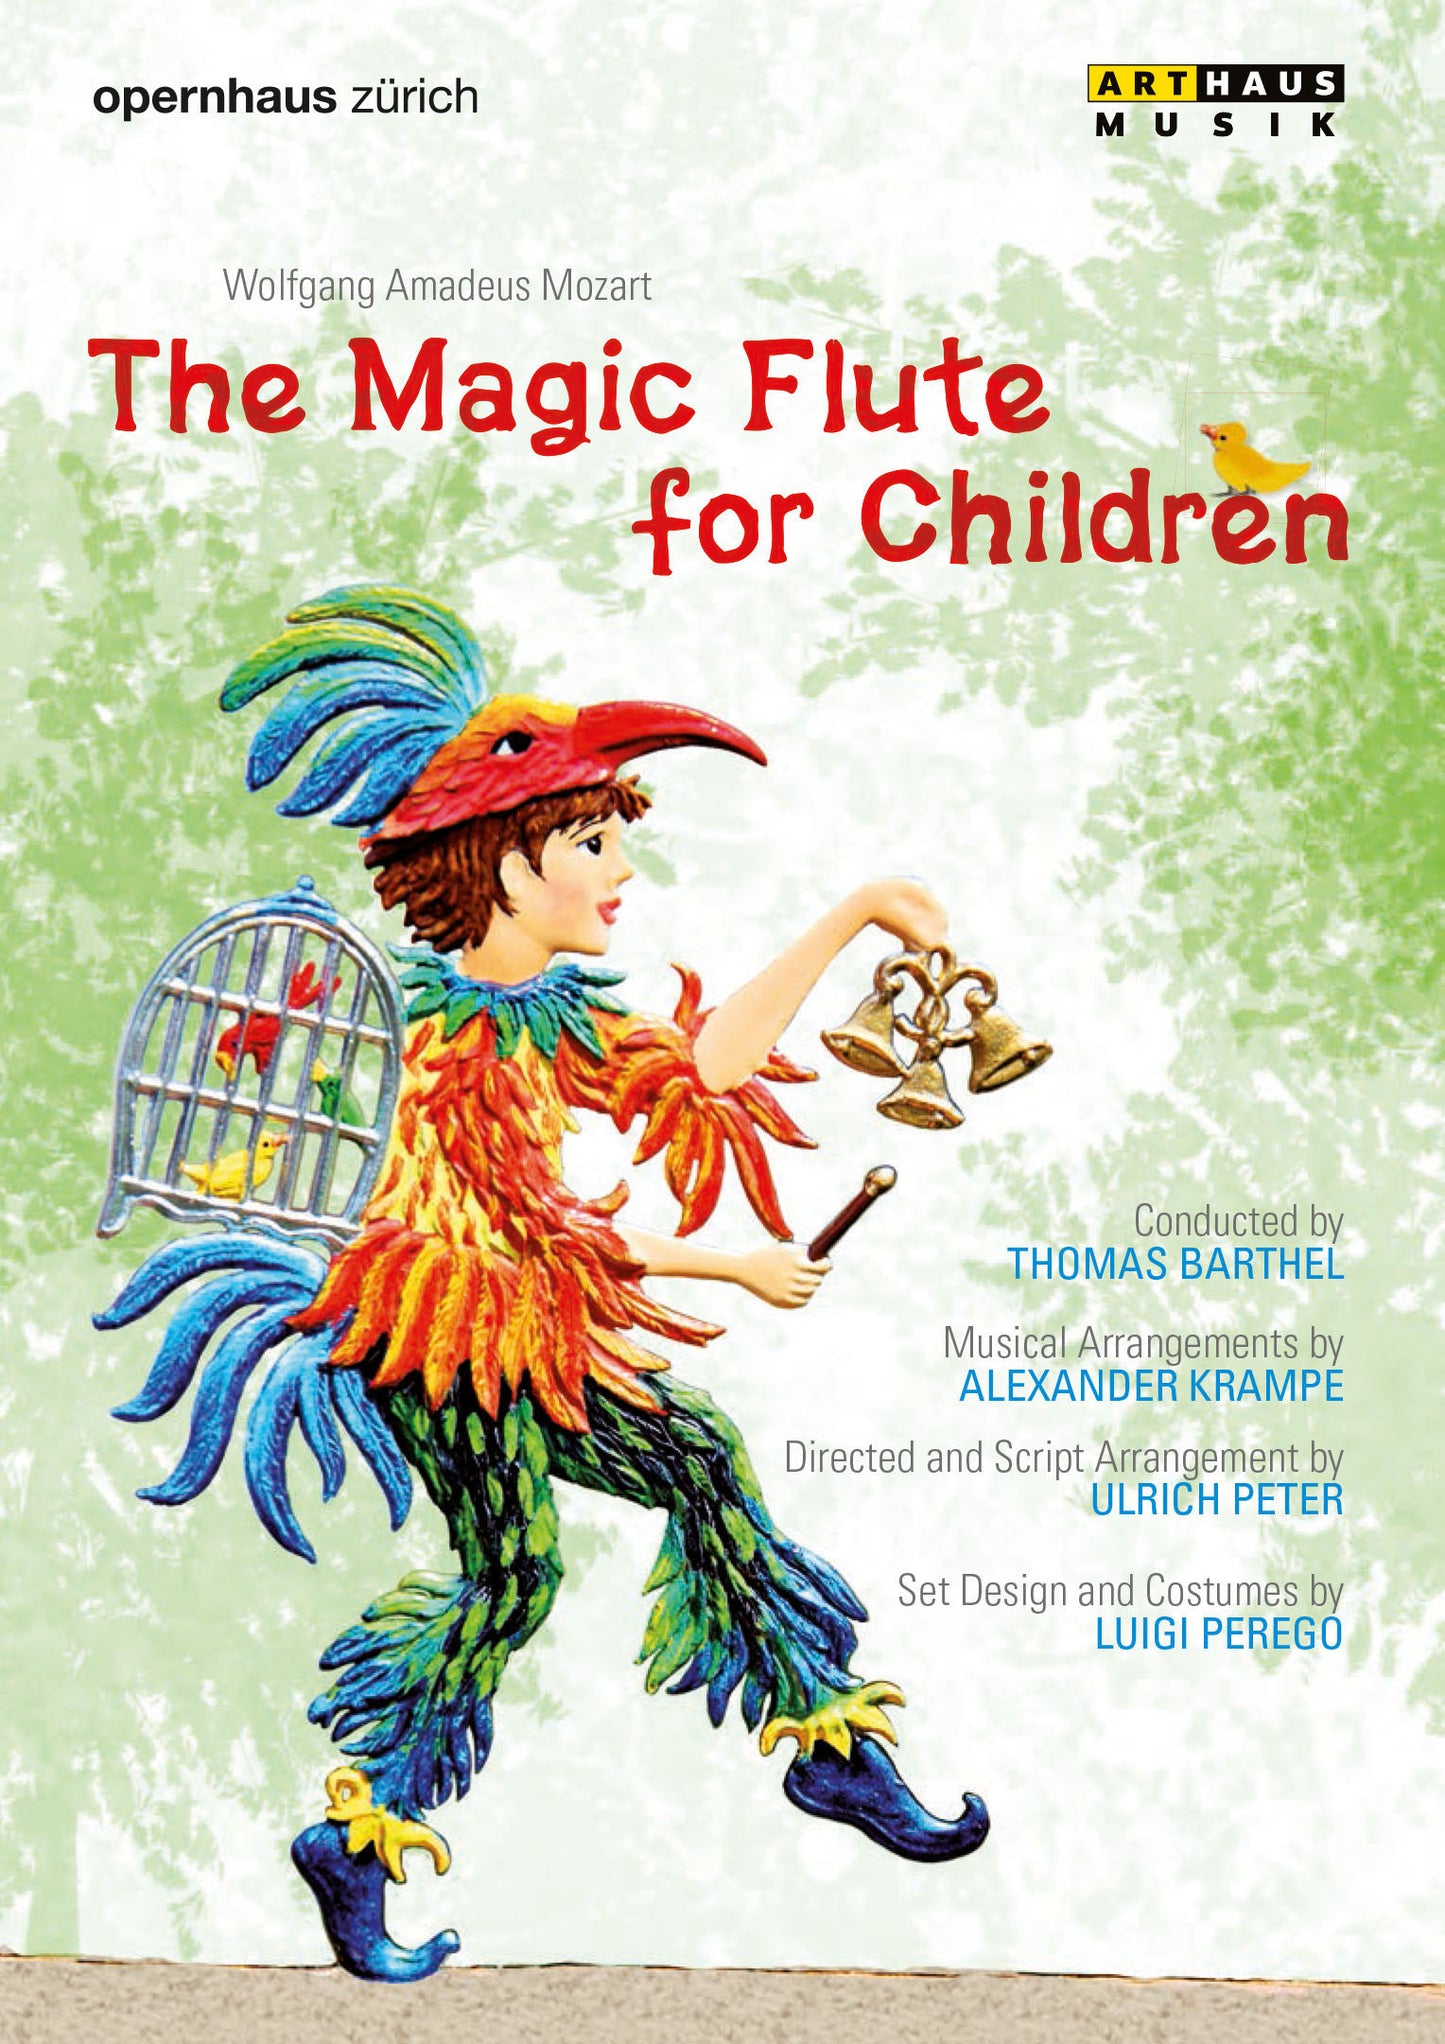 Wolfgang Amadeus Mozart: The Magic Flute for Children [Video] cover art